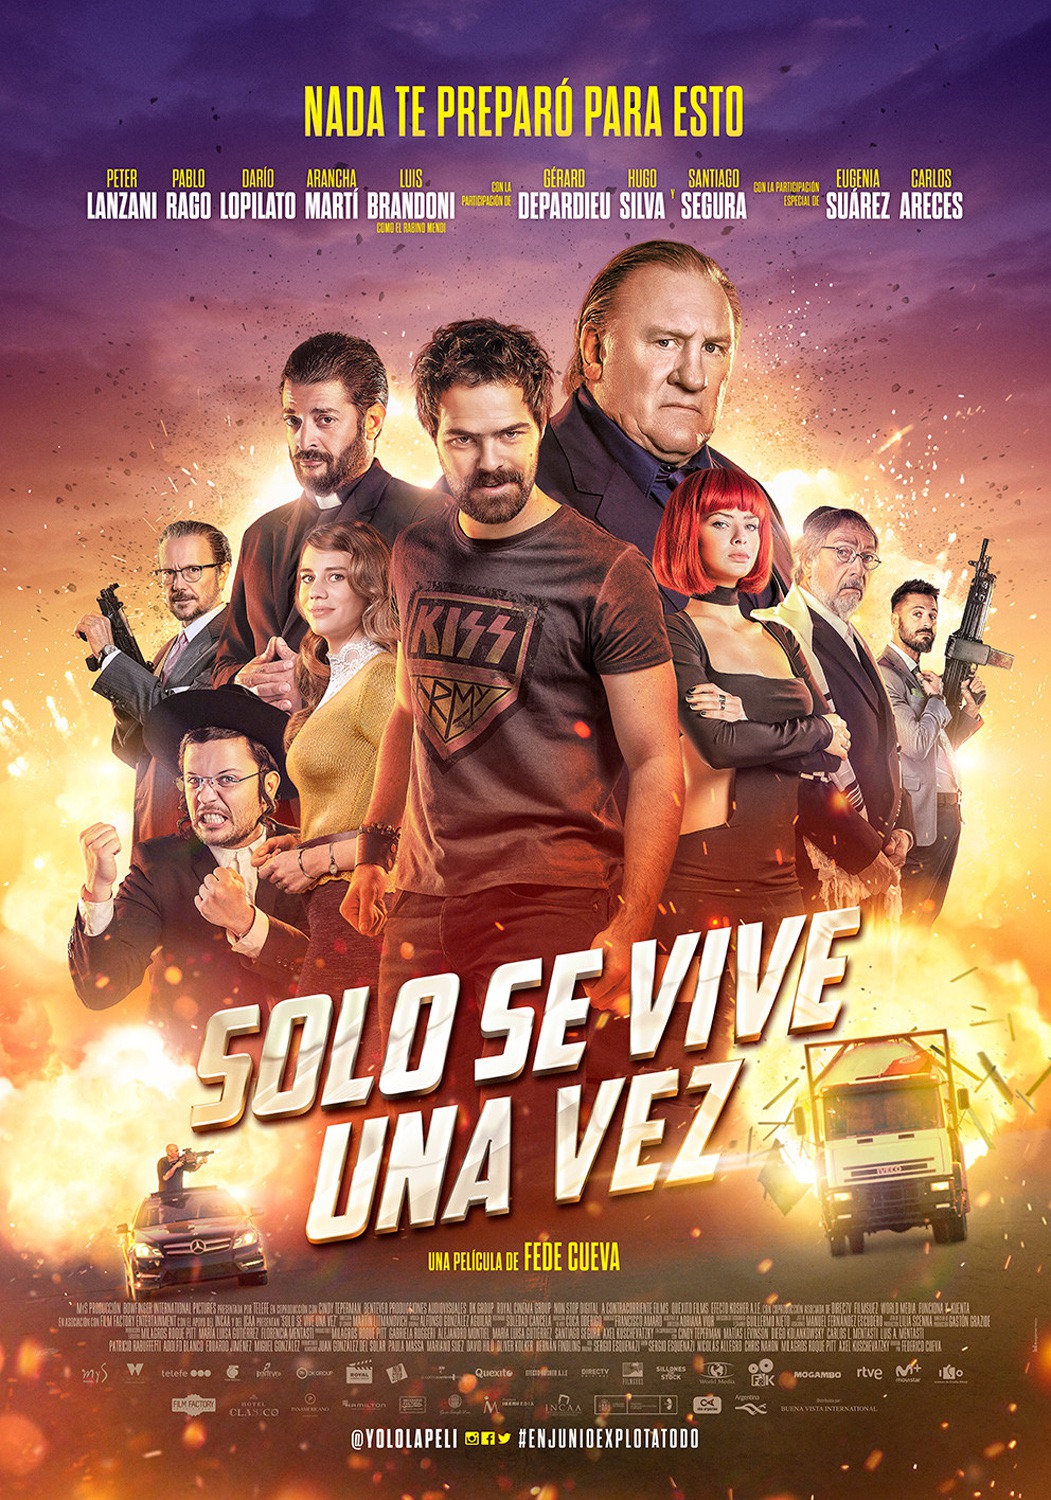 Extra Large Movie Poster Image for Sólo se vive una vez (#1 of 2)